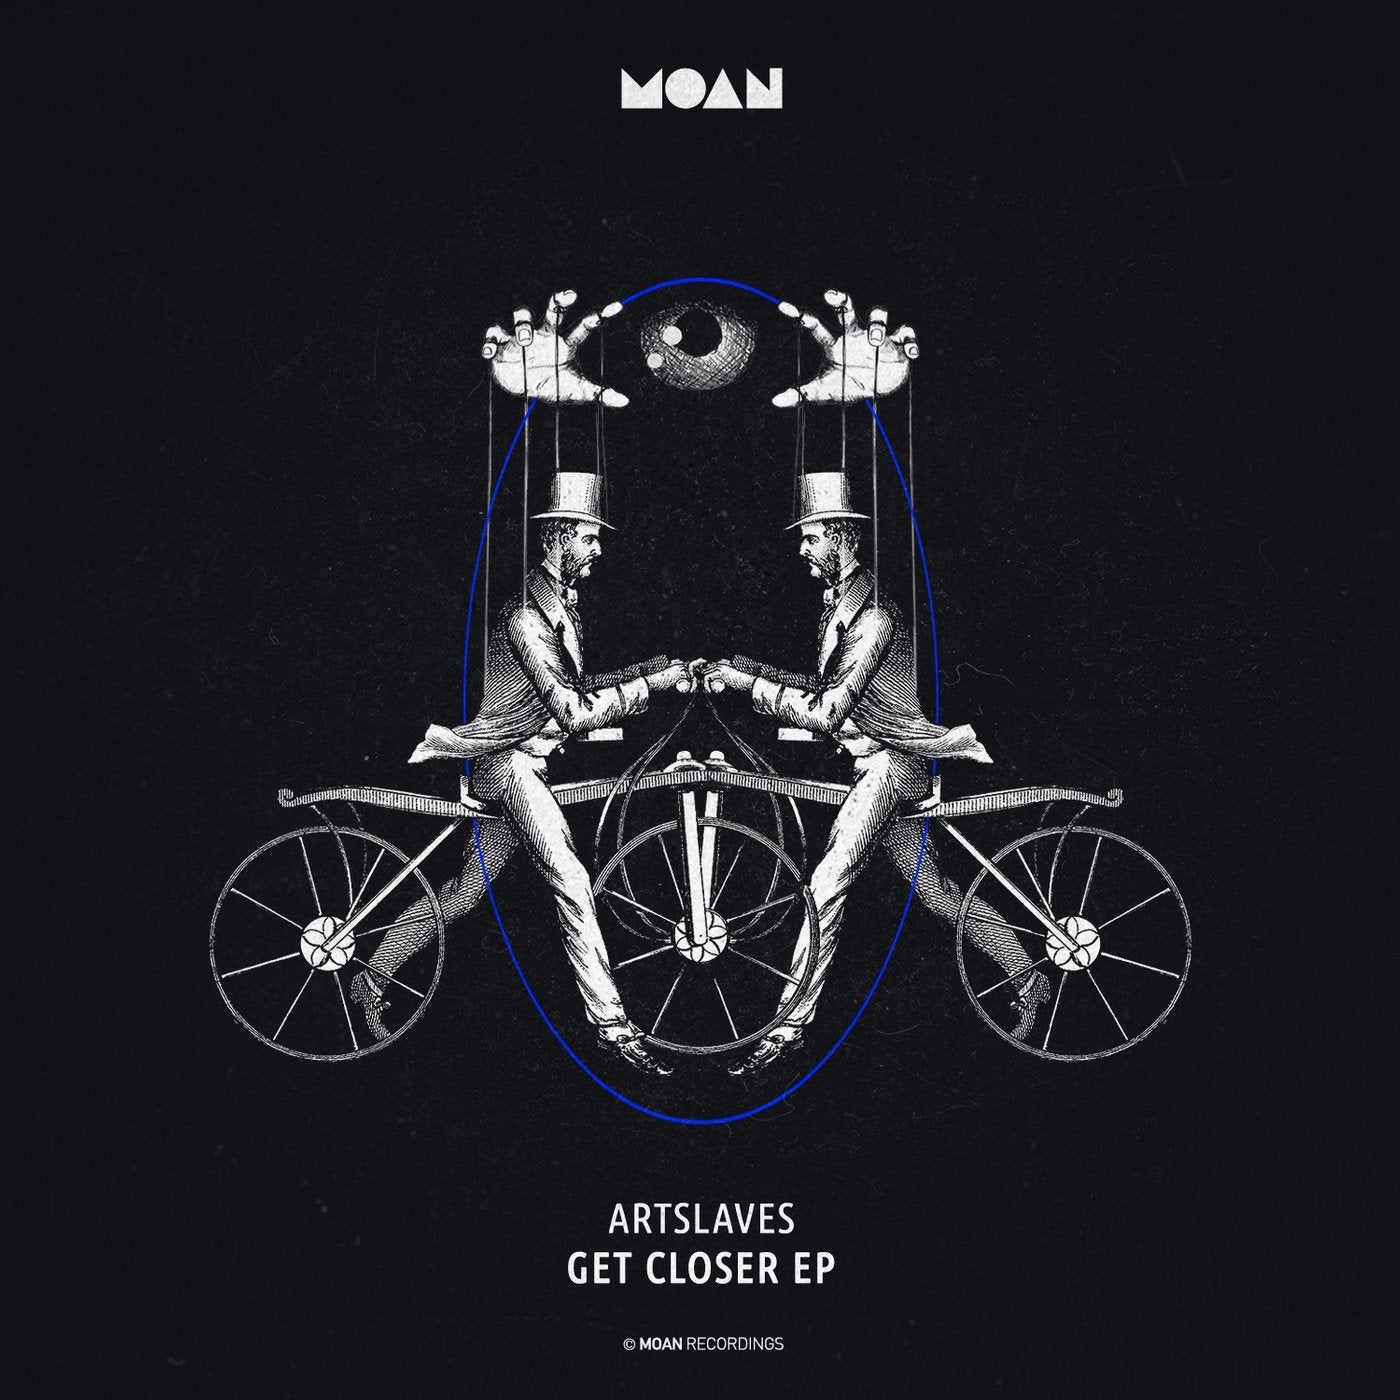 Get Closer EP